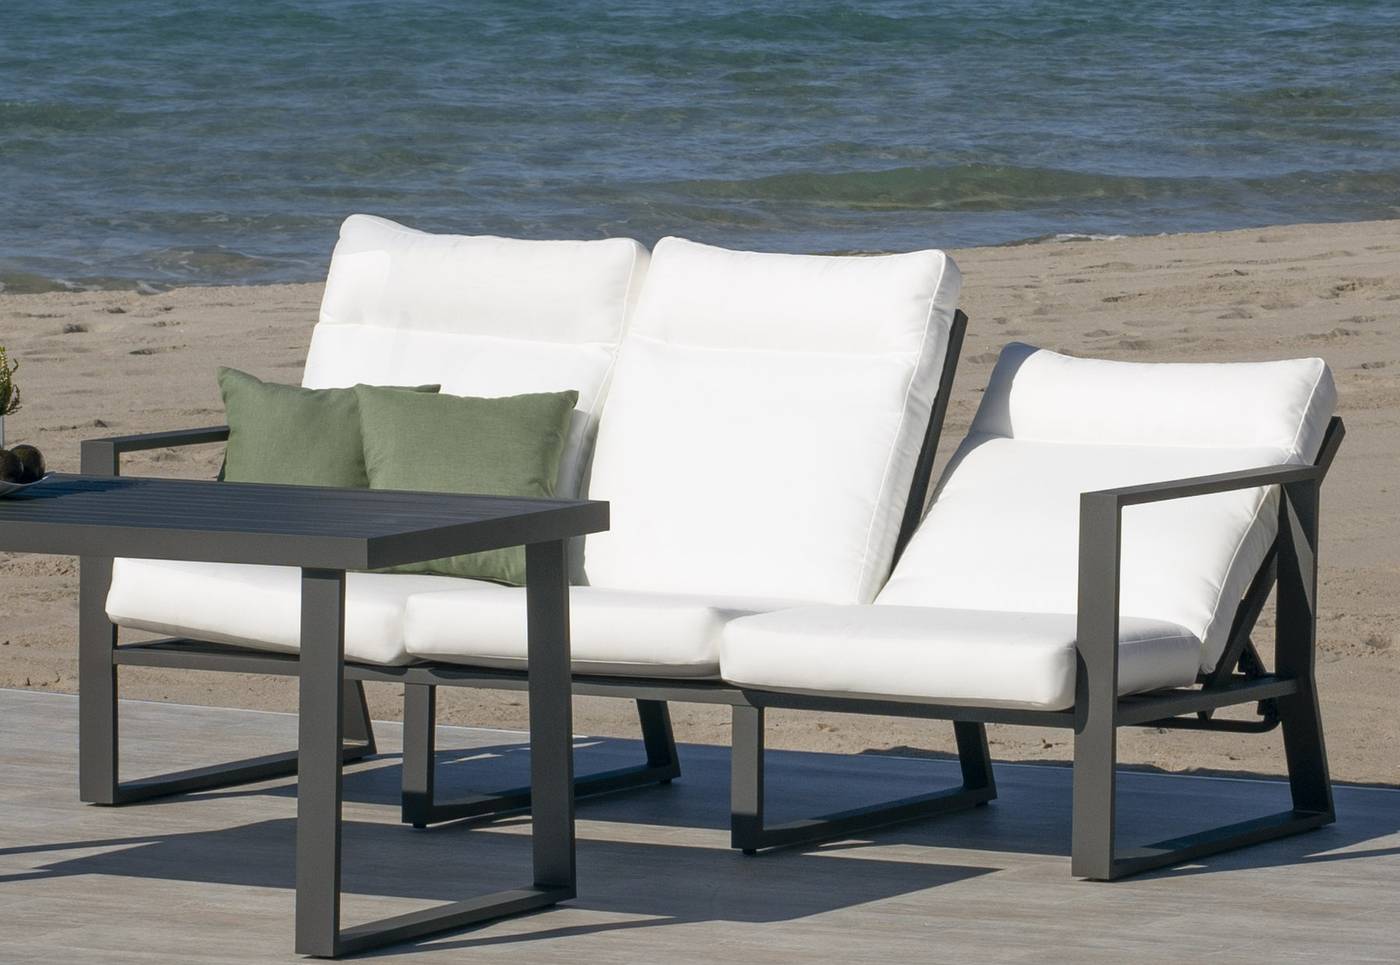 Sofá relax lujo 3 plazas, con respaldos reclinables. Fabricado de aluminio en color blanco, antracita o bronce.